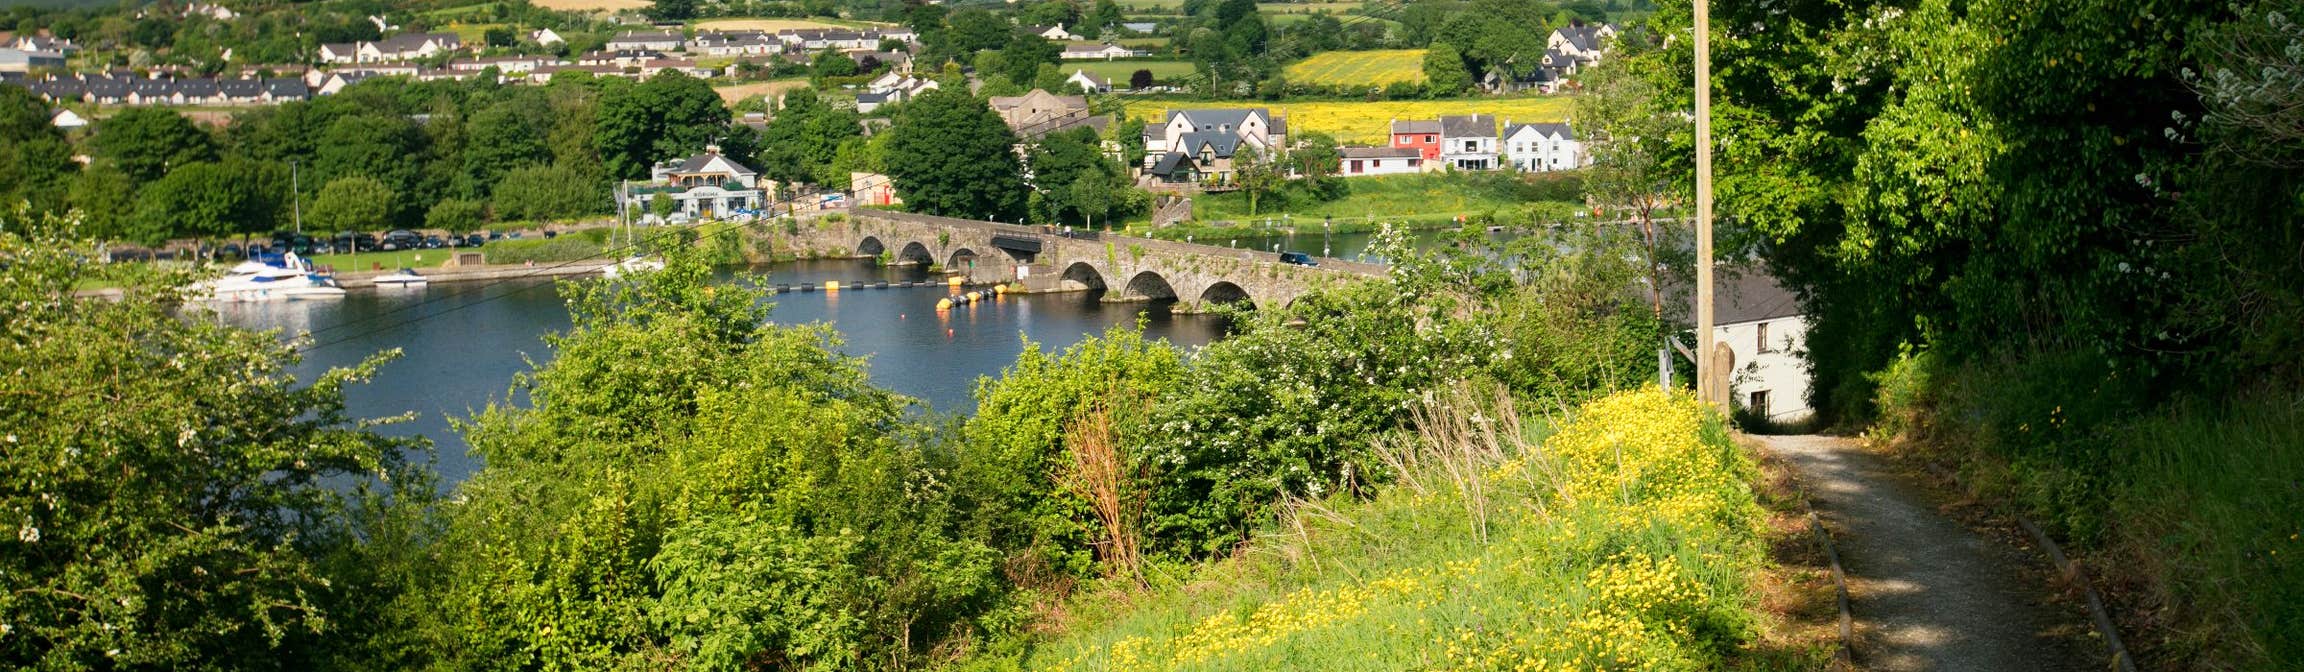 Image of Killaloe in County Clare